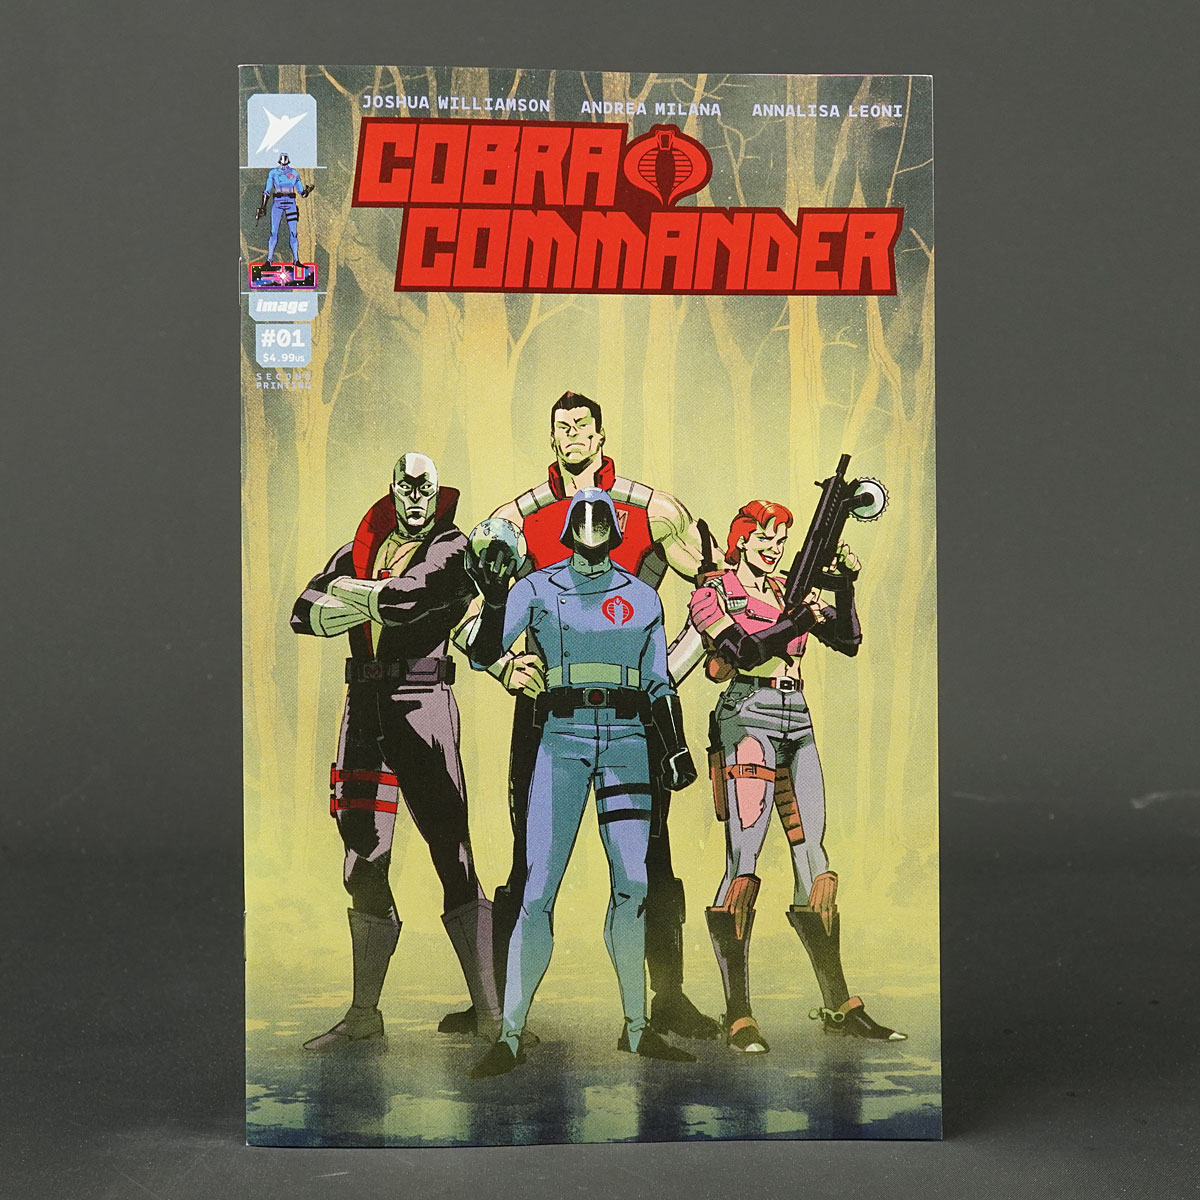 COBRA COMMANDER #1 2nd ptg Cvr C Image Comics 1223IM857 (CA) Milana